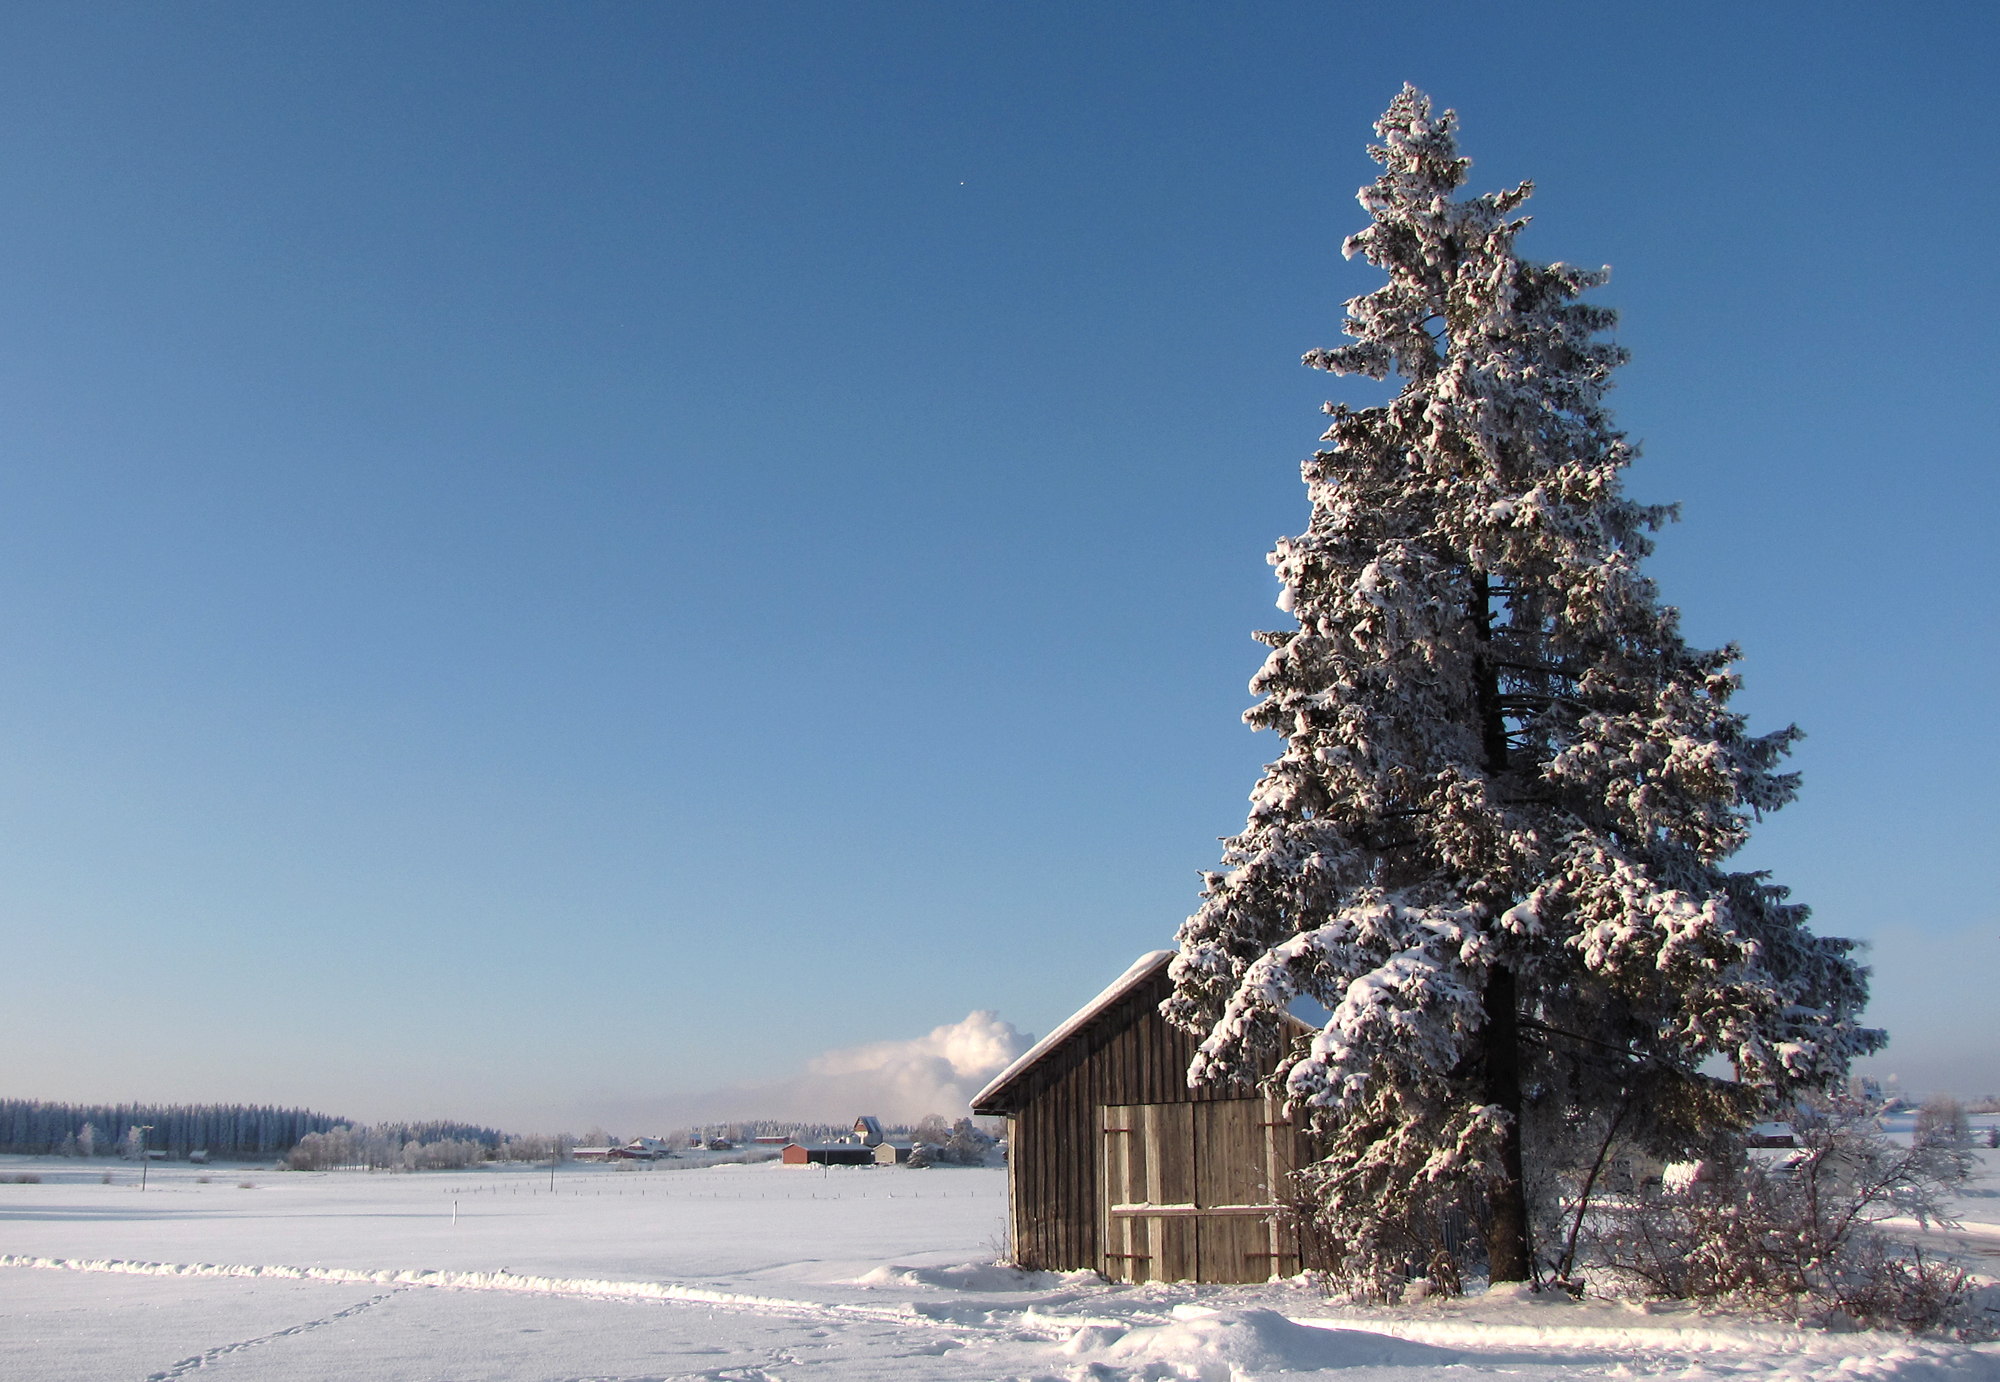 File:Winter-landscape-Lappeenranta-Finland.jpg - Wikimedia Commons